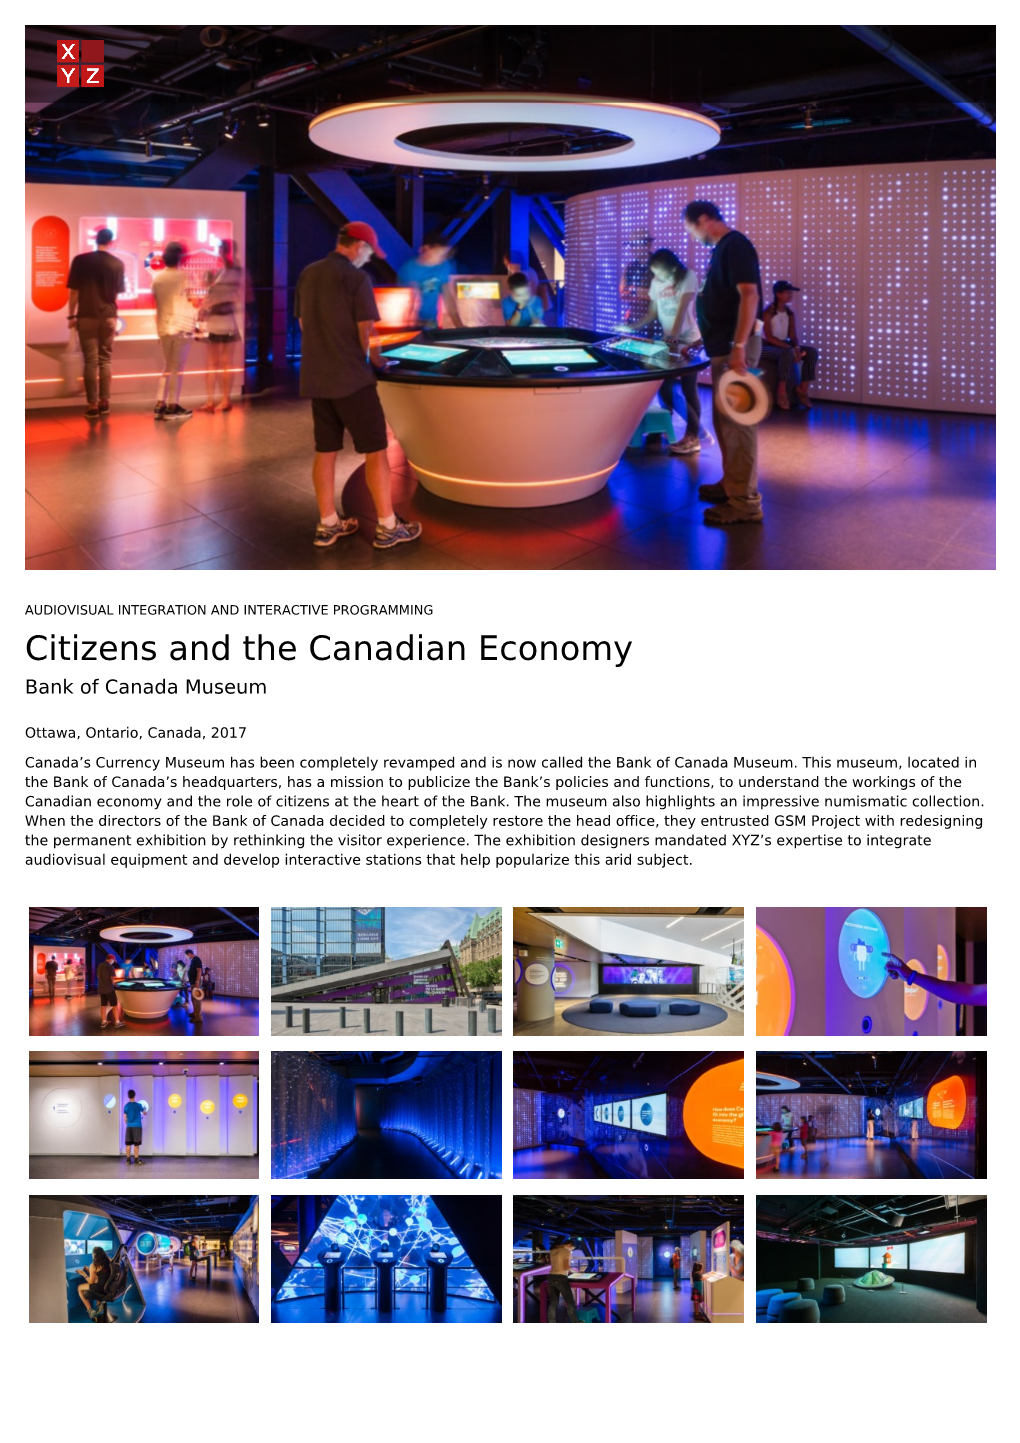 Bank of Canada Museum | AV Integration and Programming | XYZ Cultural Technology